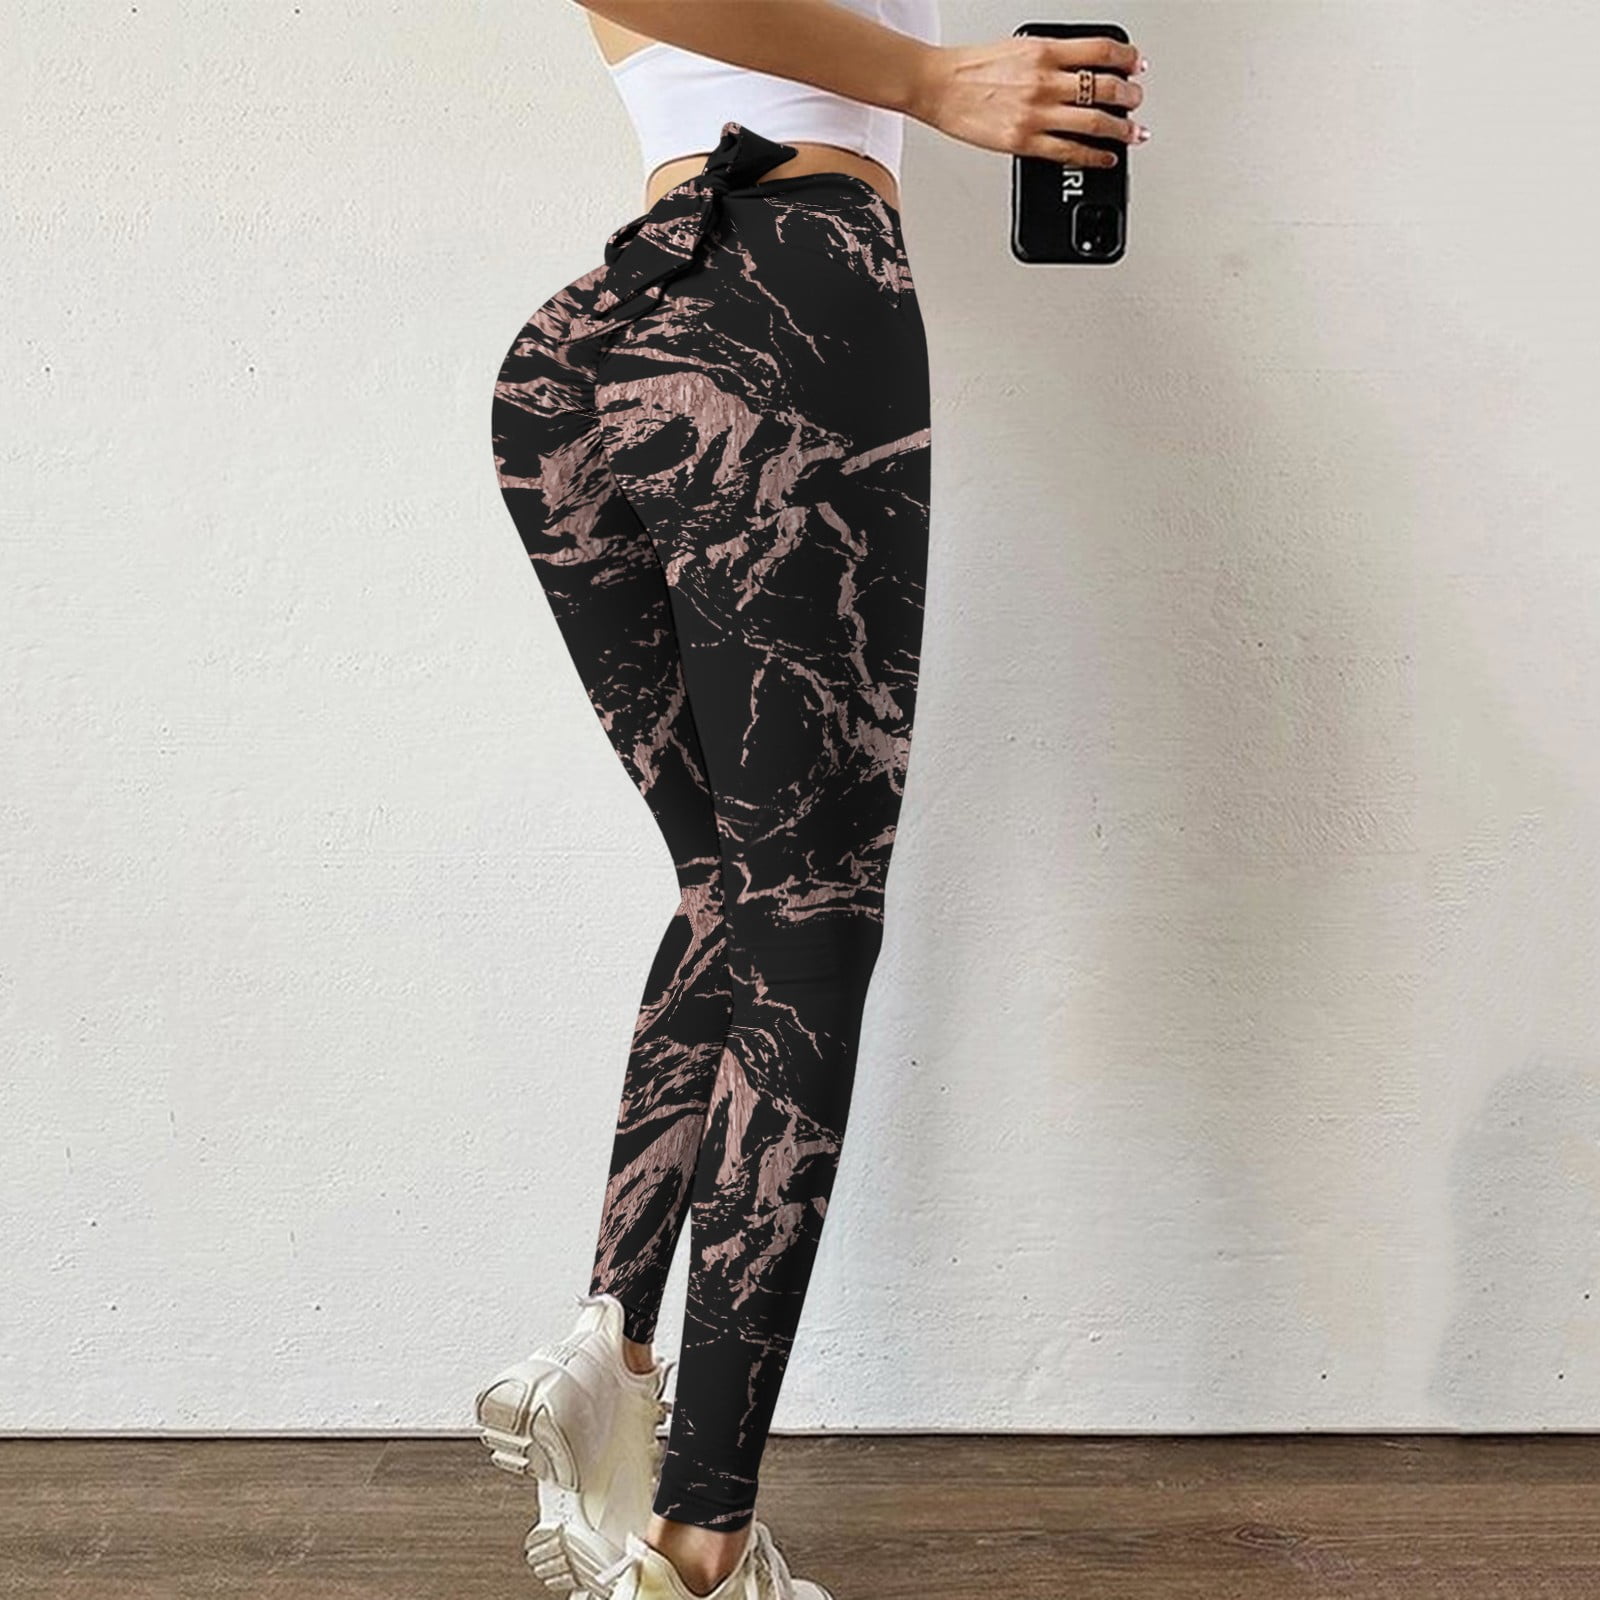 Gubotare Yoga Pants For Women Bootcut Women's Yoga Pants High Waist 7/8  Length Leggings Tummy Control Non See-Through Workout Sport Running